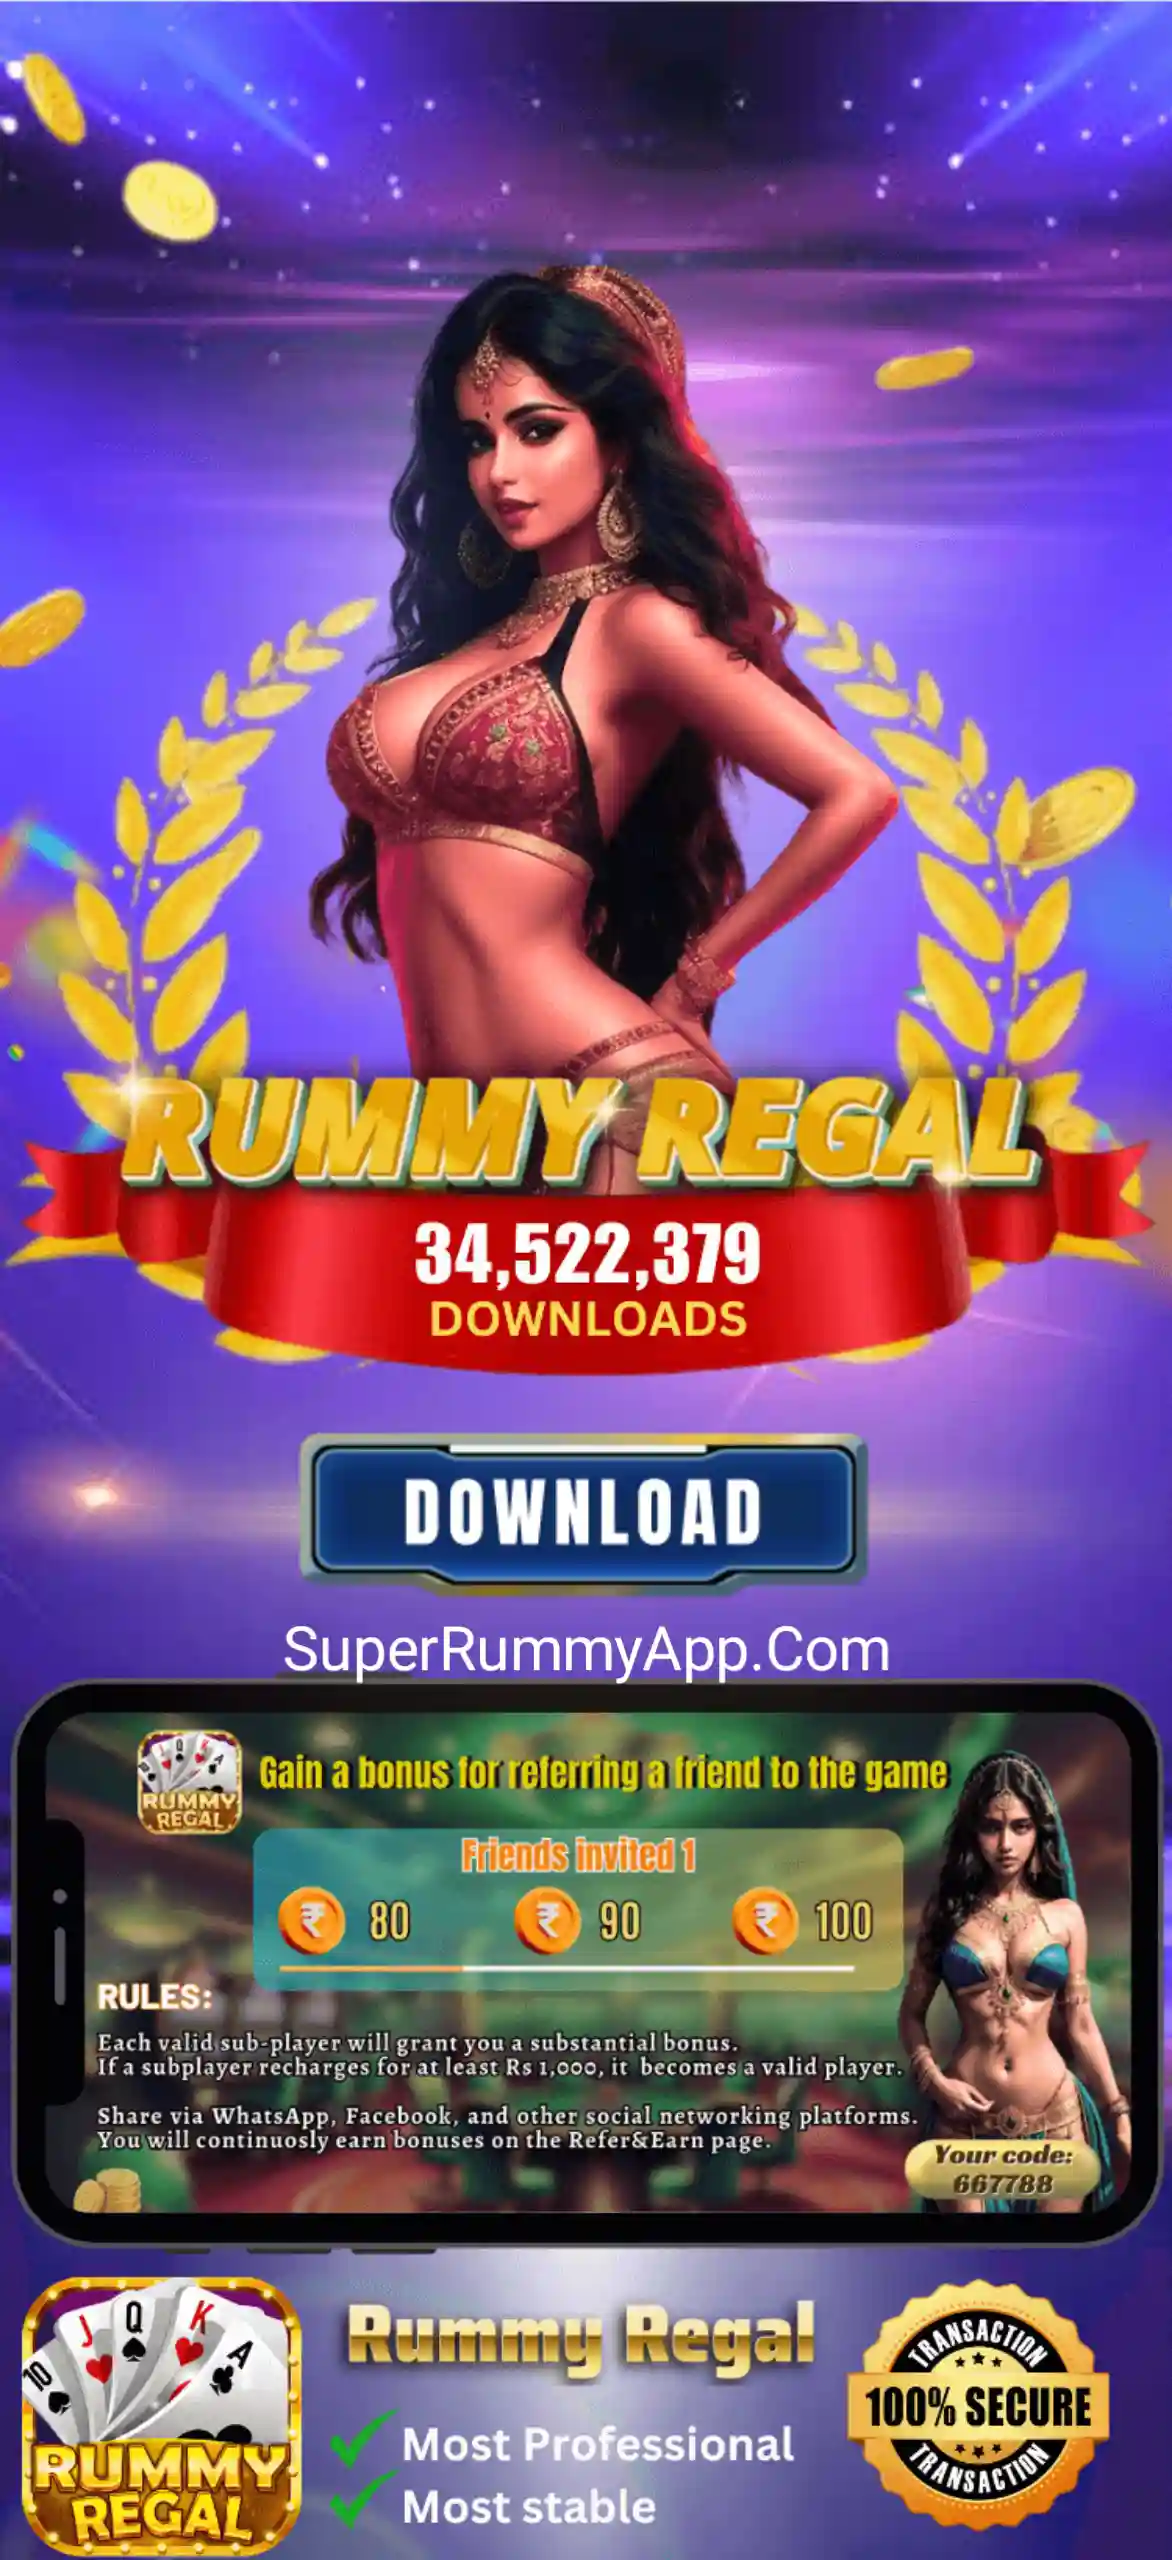 Rummy Regal Apk Download - India Rummy App